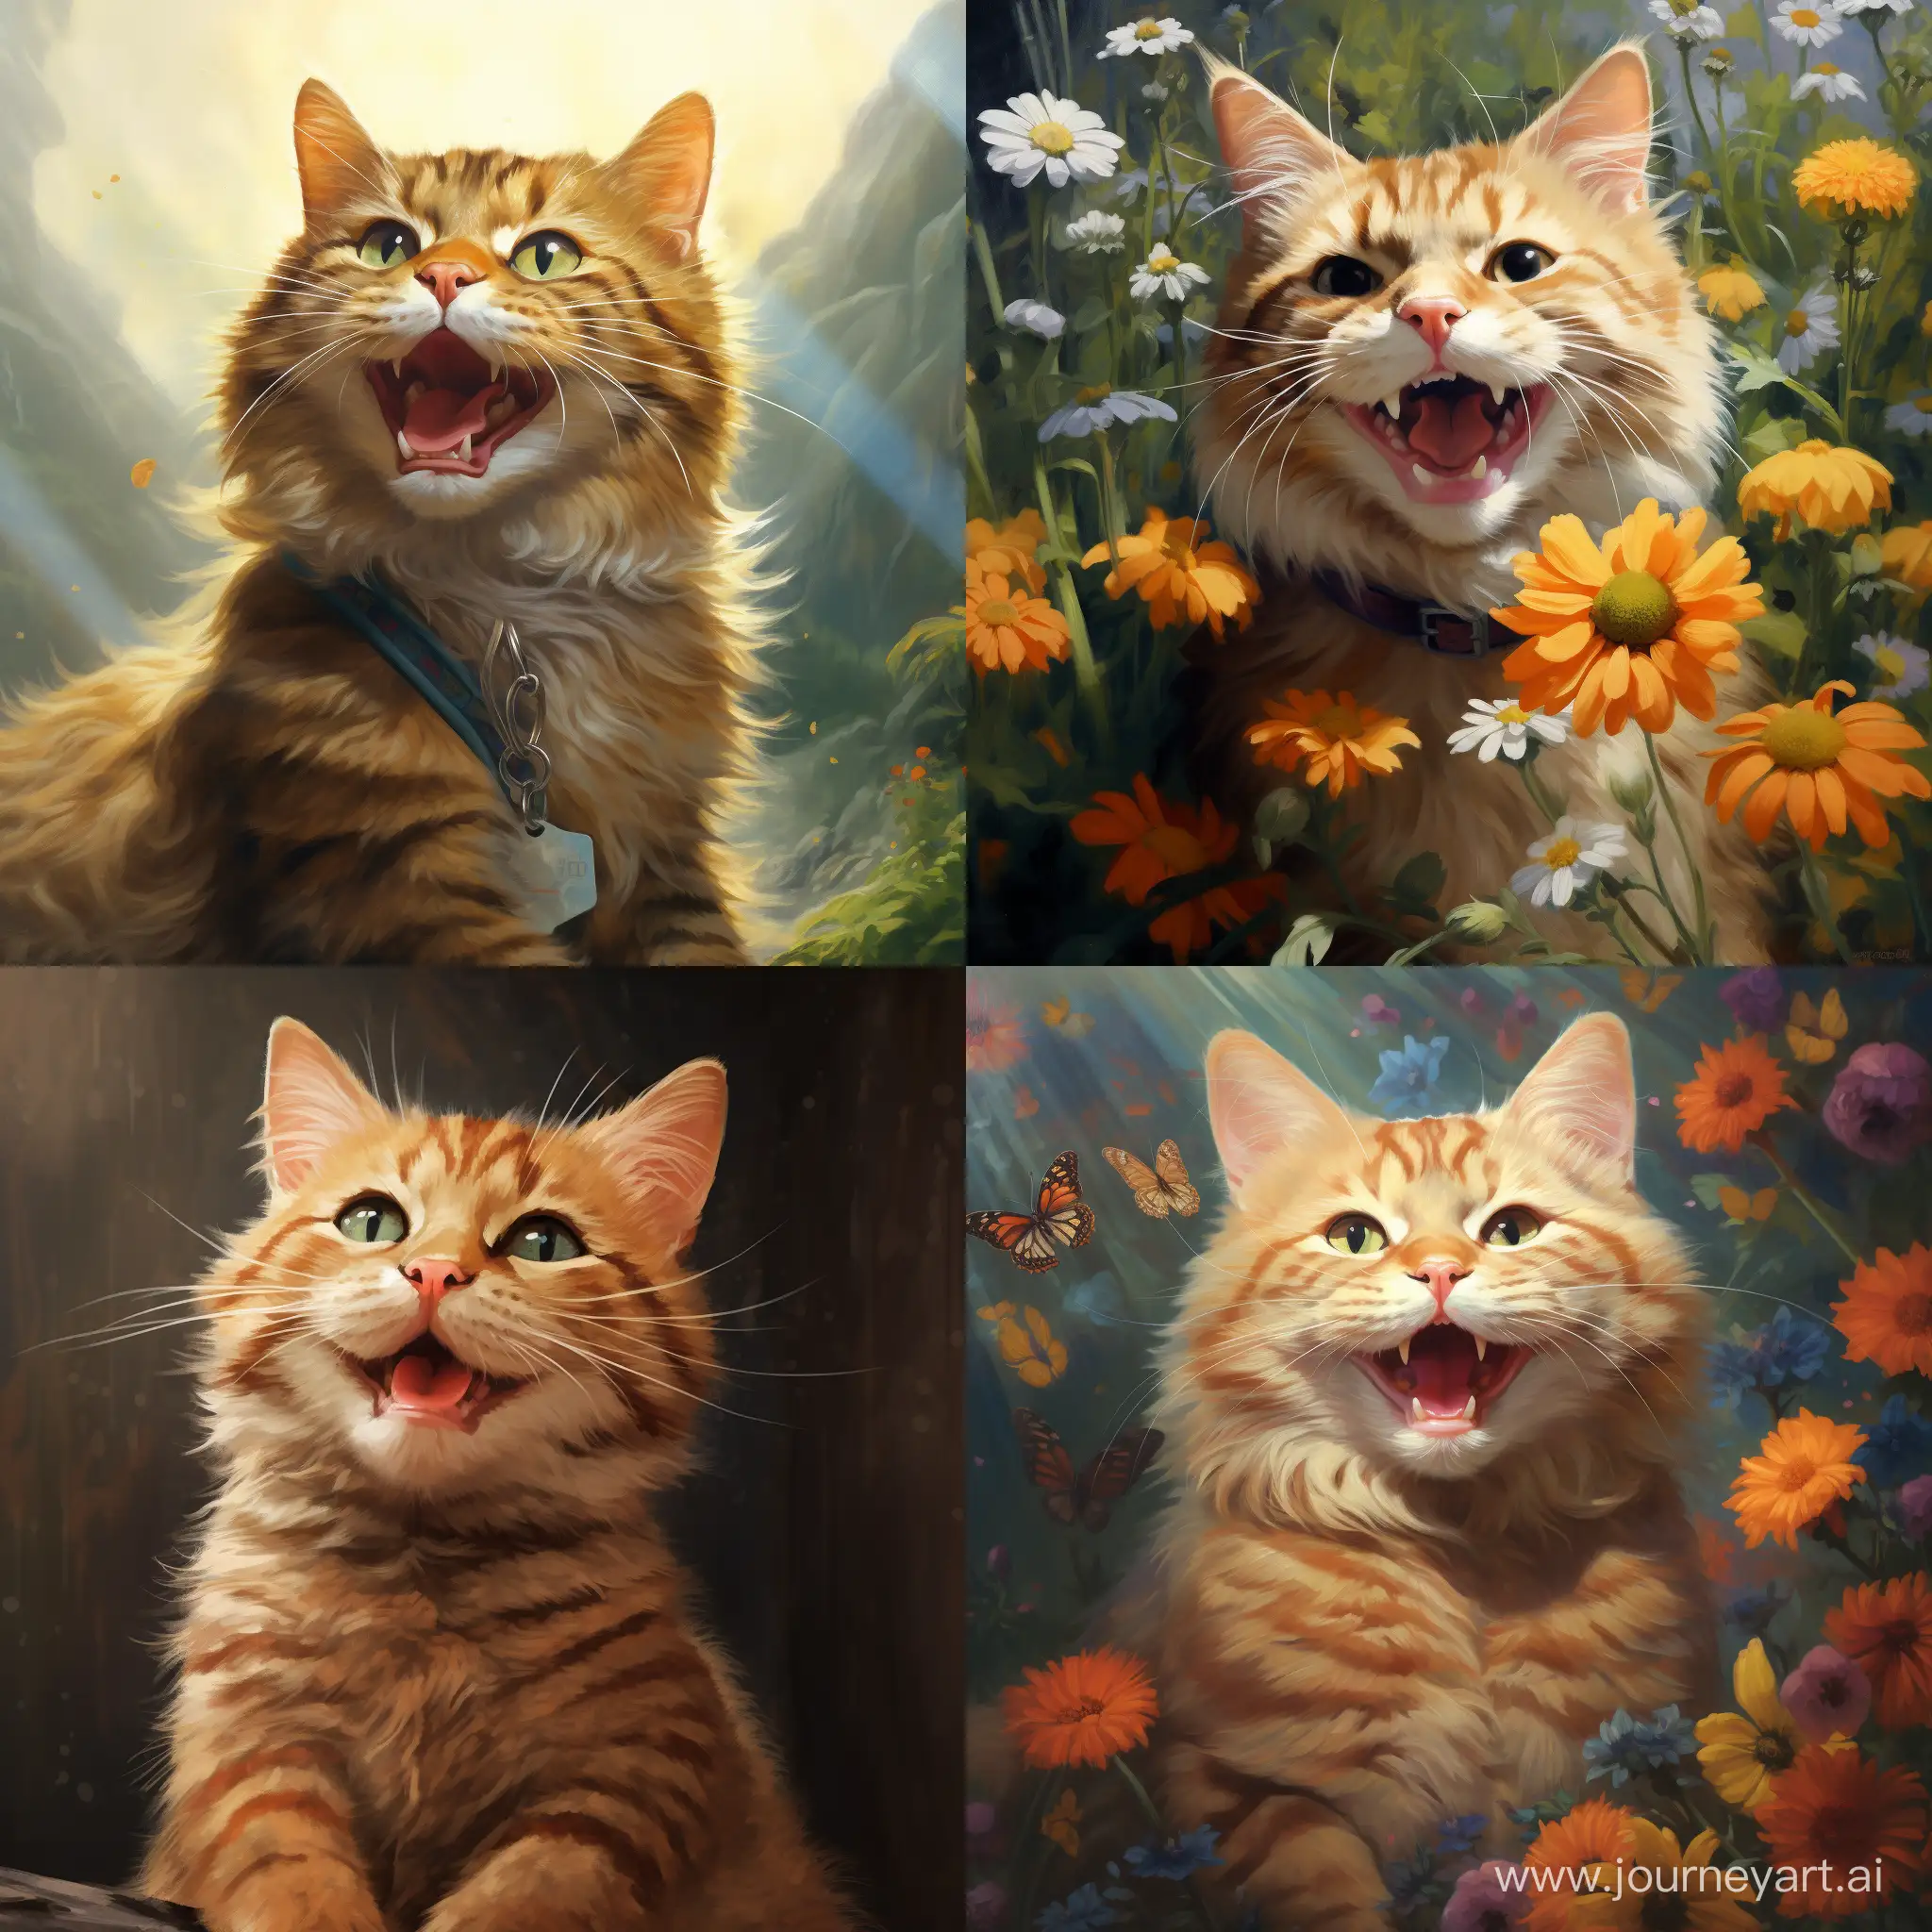 Joyful-Cat-Playfully-Posing